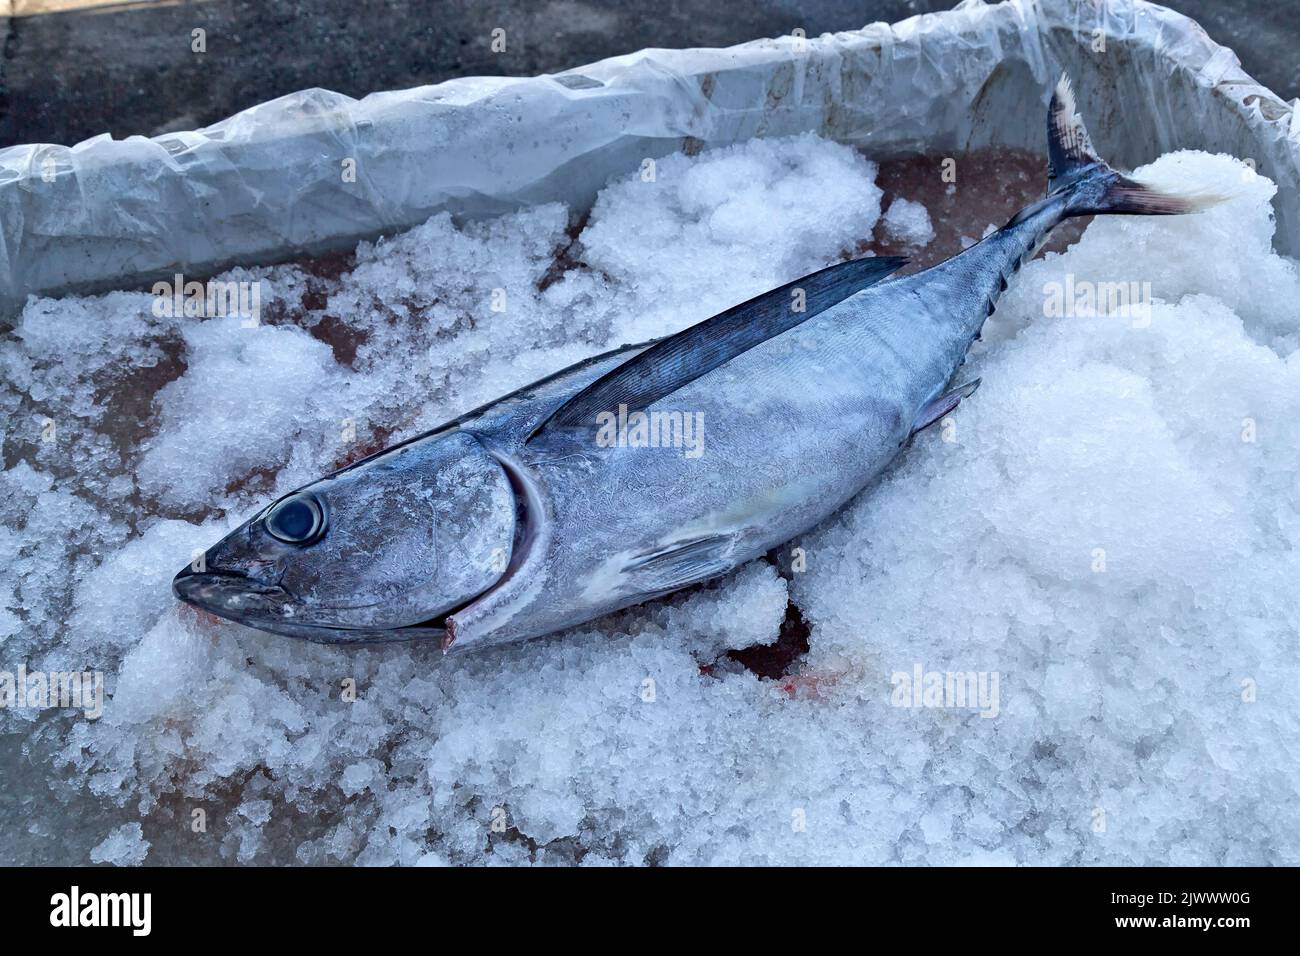 Harvested Albacore Tuna 'Thunnus alalunga' on ice. Stock Photo